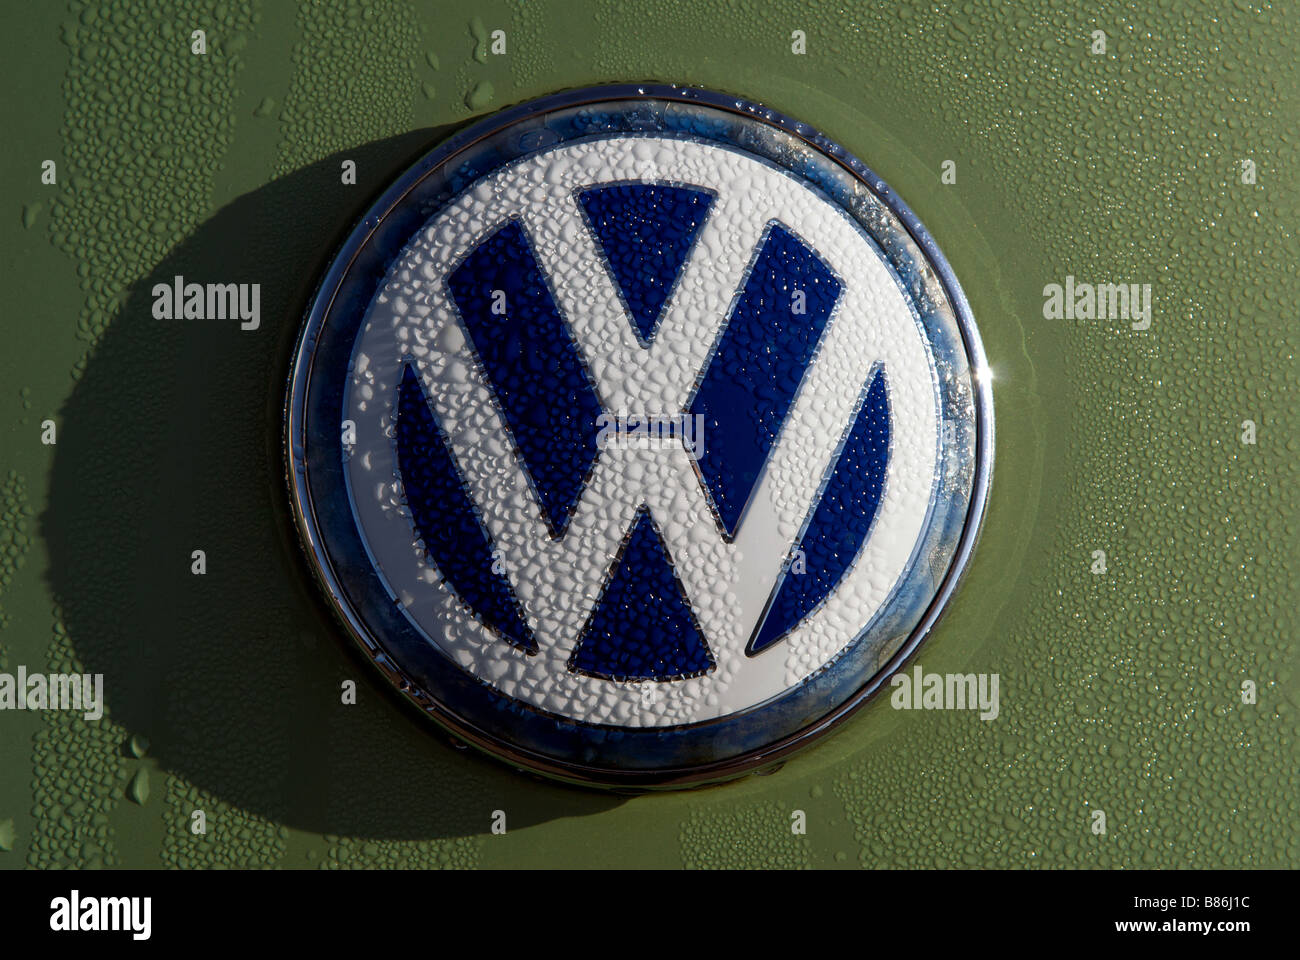 VW-Emblem auf Kühlergrill des Volkswagen Fahrzeug Aufkleber Stockfotografie  - Alamy